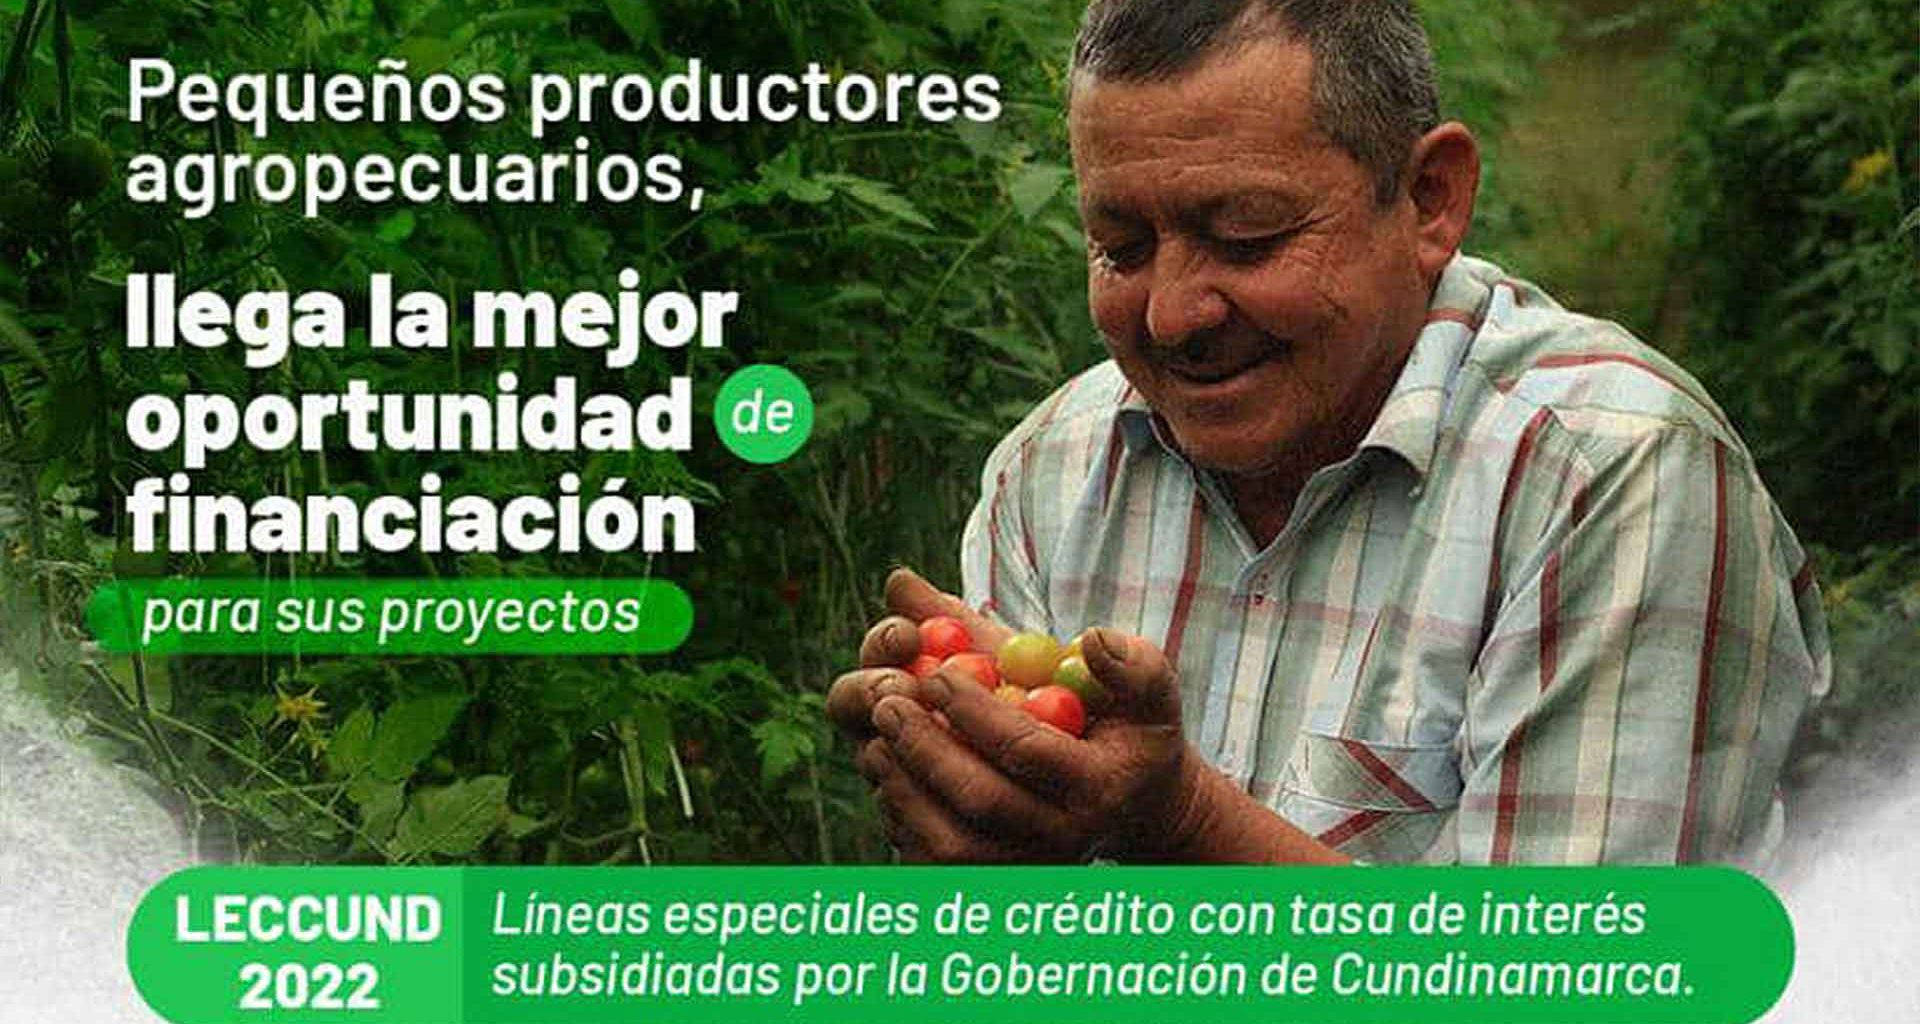 Ayudas del Banco Agrario para pequeÃ±os productores en